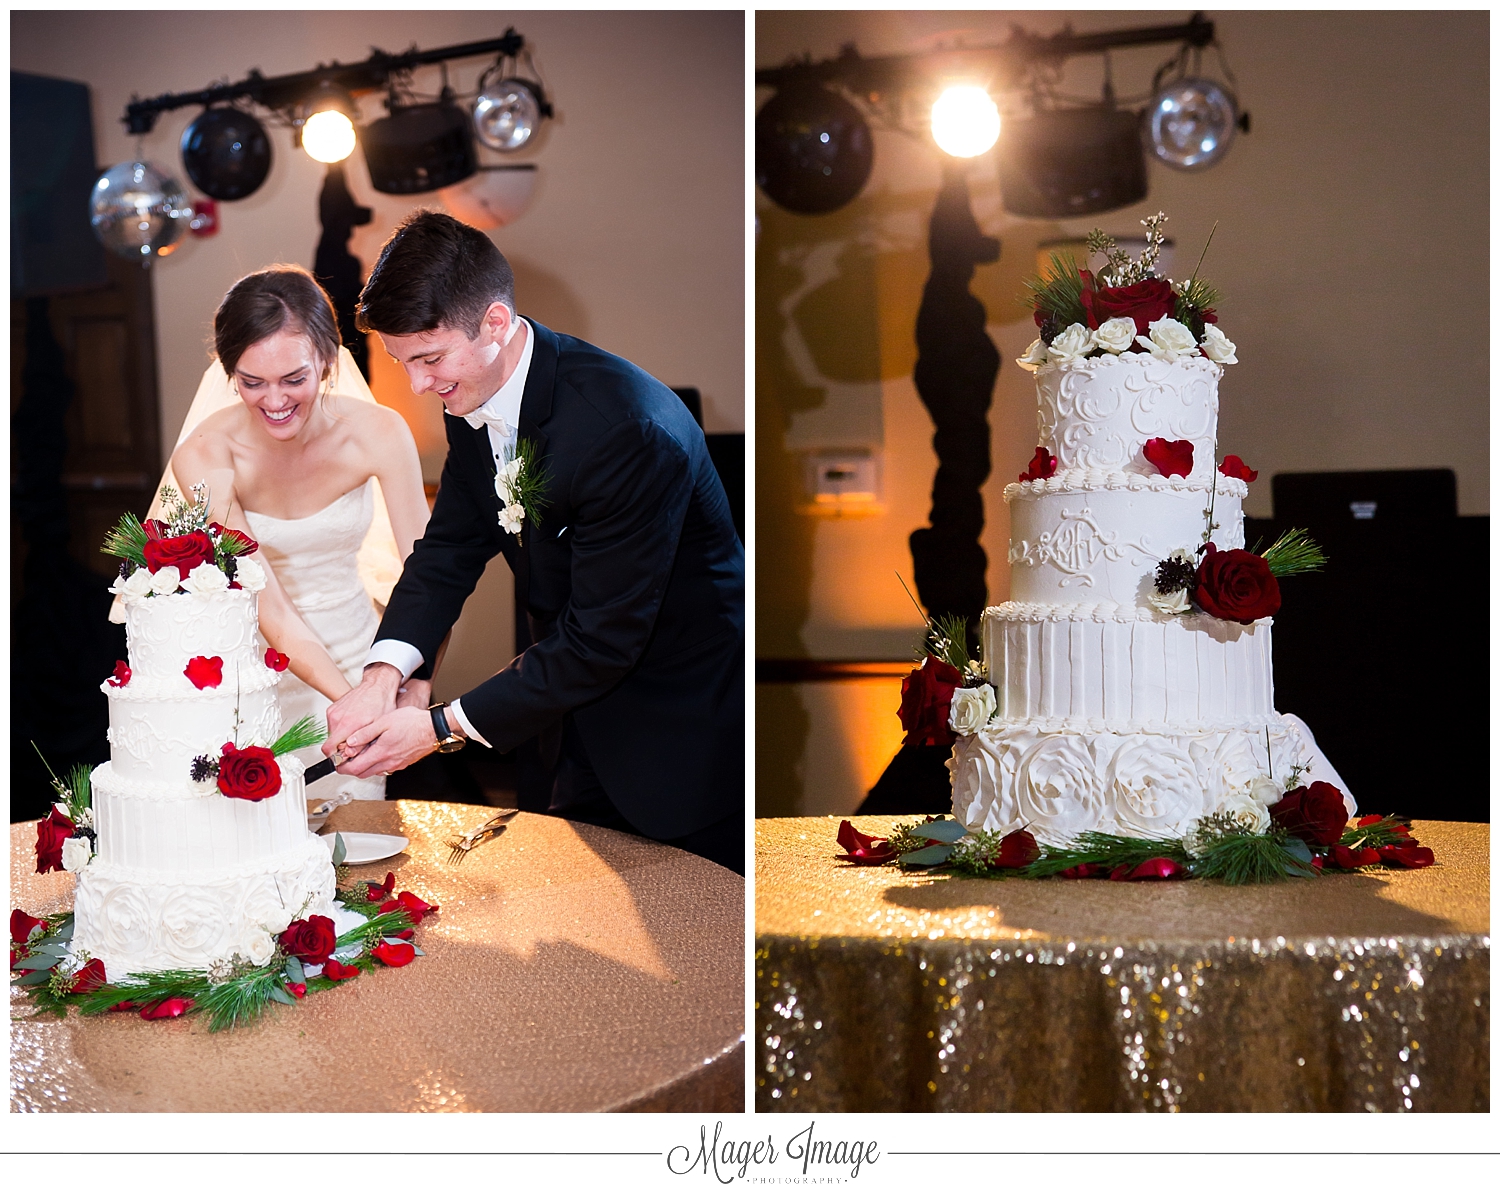 champaign illinois area wedding cake baker feature